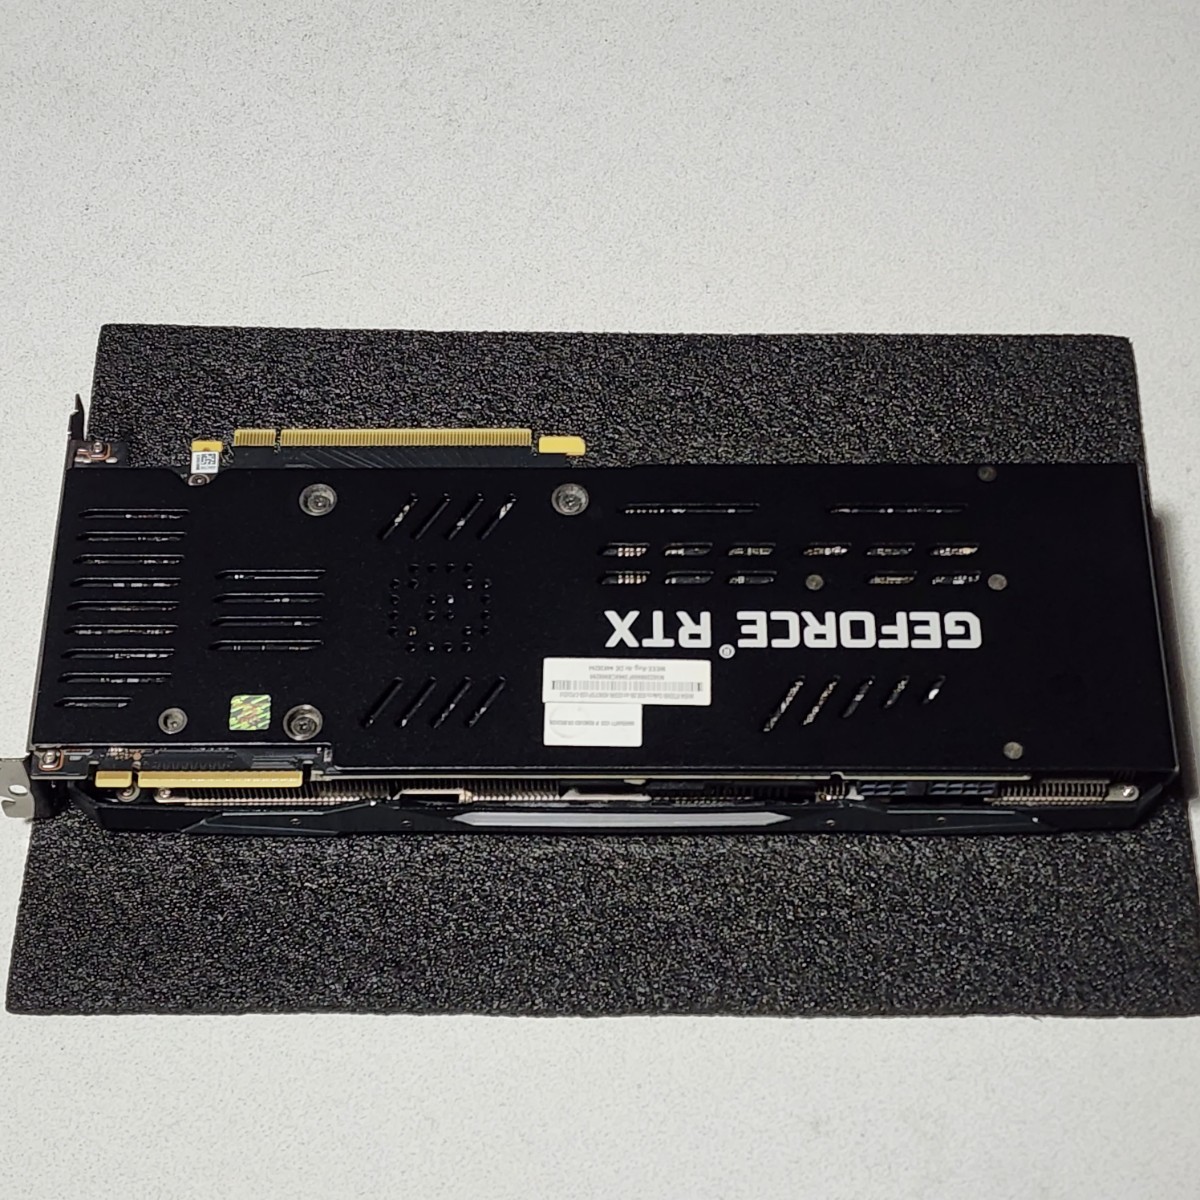 認識確認済み)NVIDIA RTX 2080Ti gallardo 11GB-